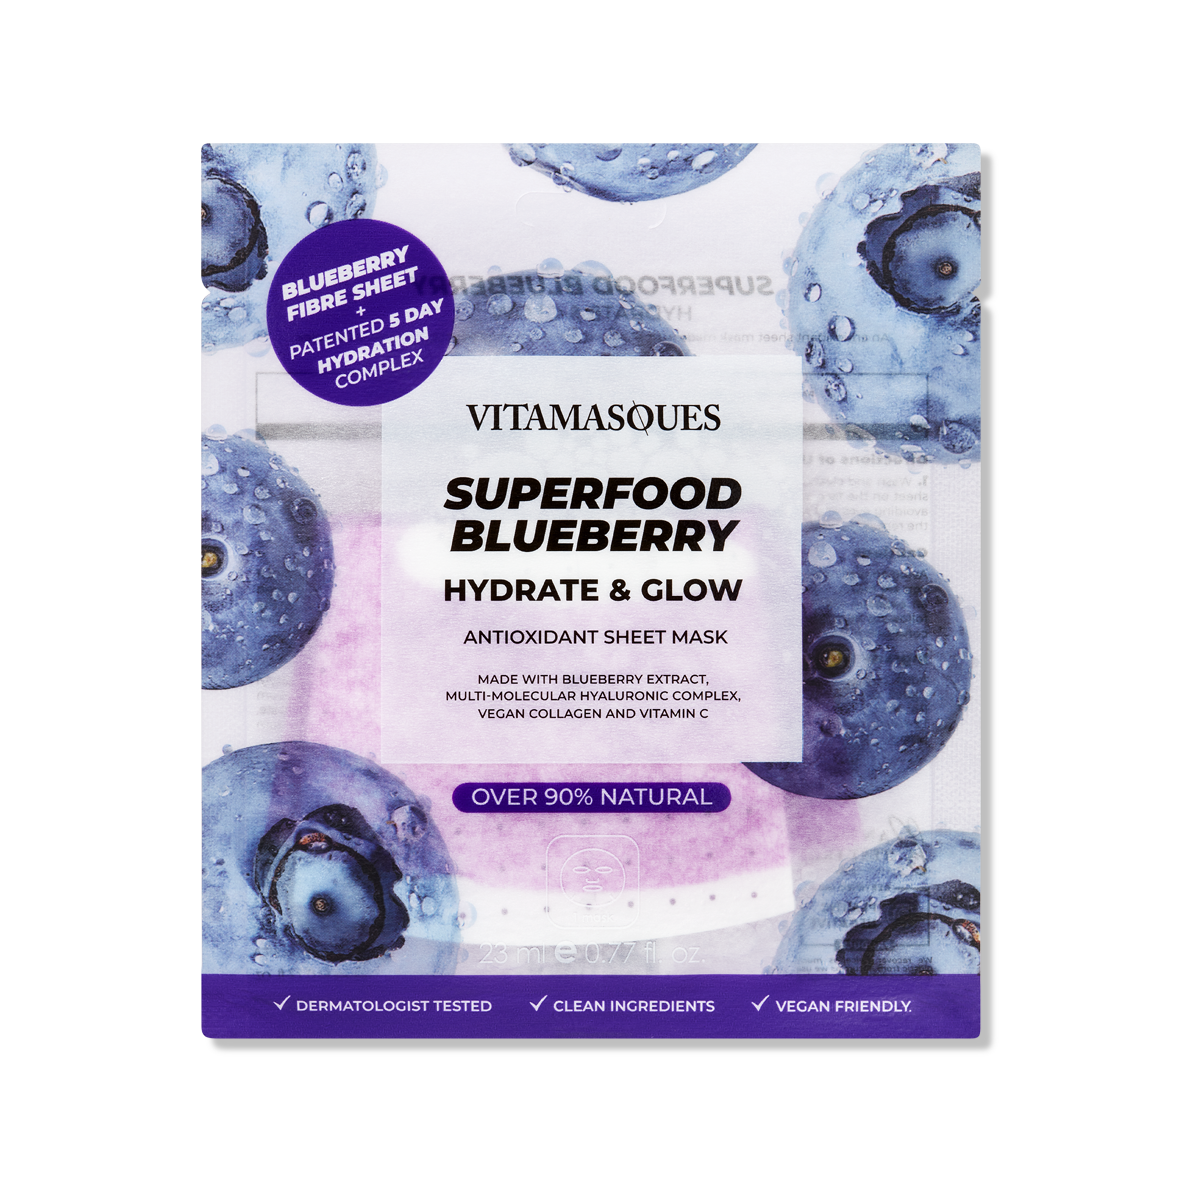 Superfood Blueberry Hydrate & Glow Antioxidant Sheet Mask